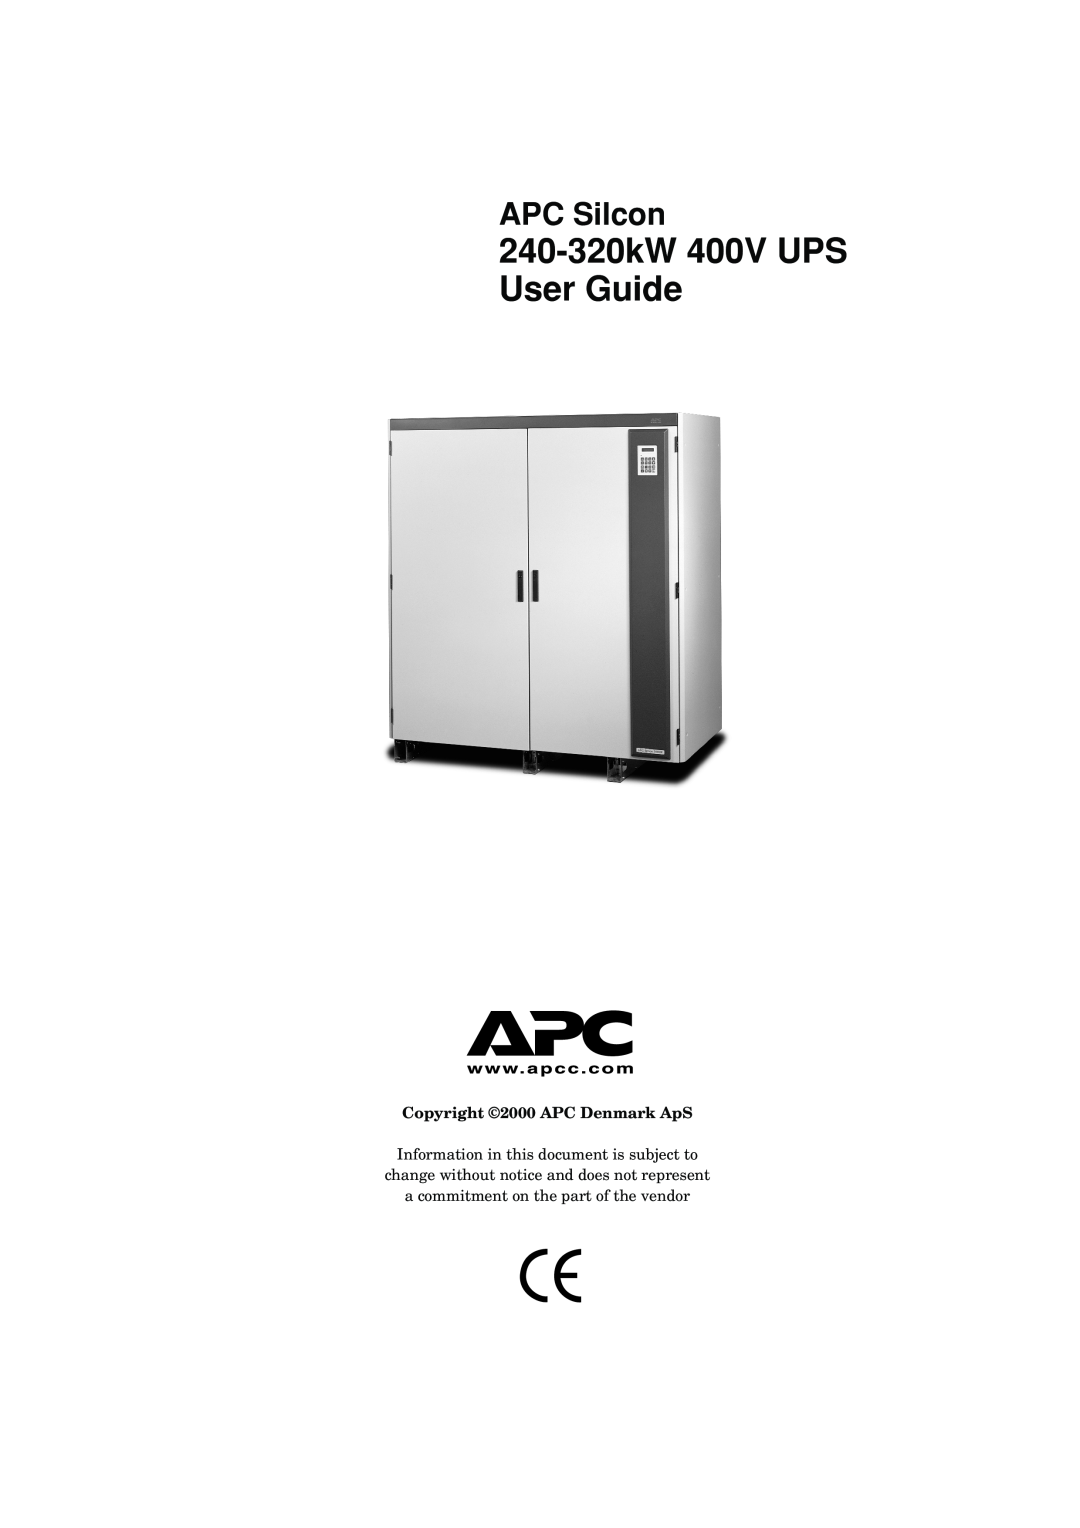 American Power Conversion APC Silcon 240-320kW 400V manual 240-320kW 400V UPS User Guide, Copyright 2000 APC Denmark ApS 